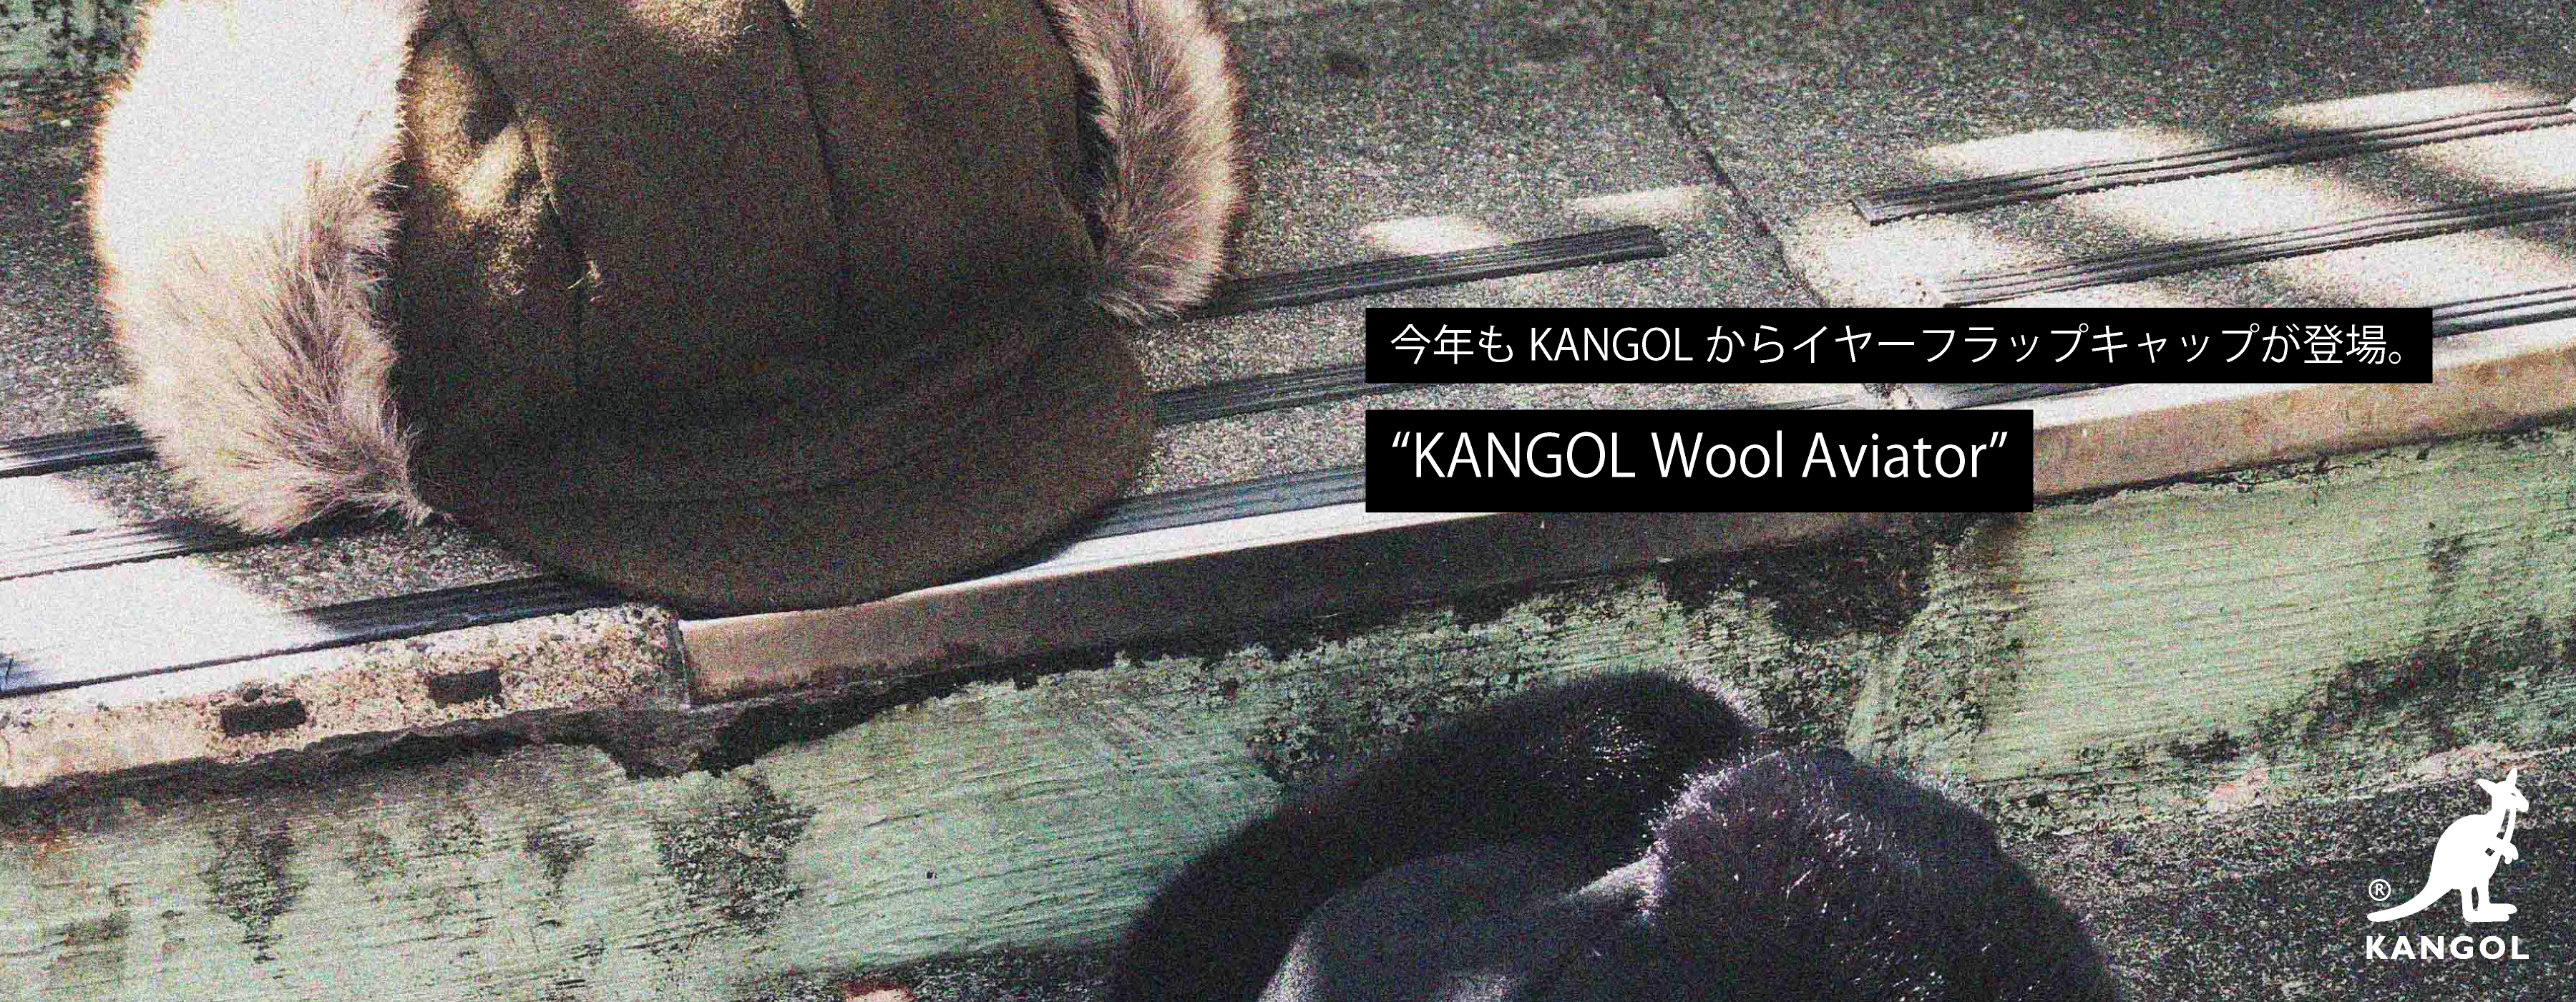 KANGOLのイヤーフラップキャップ “Wool Aviator”